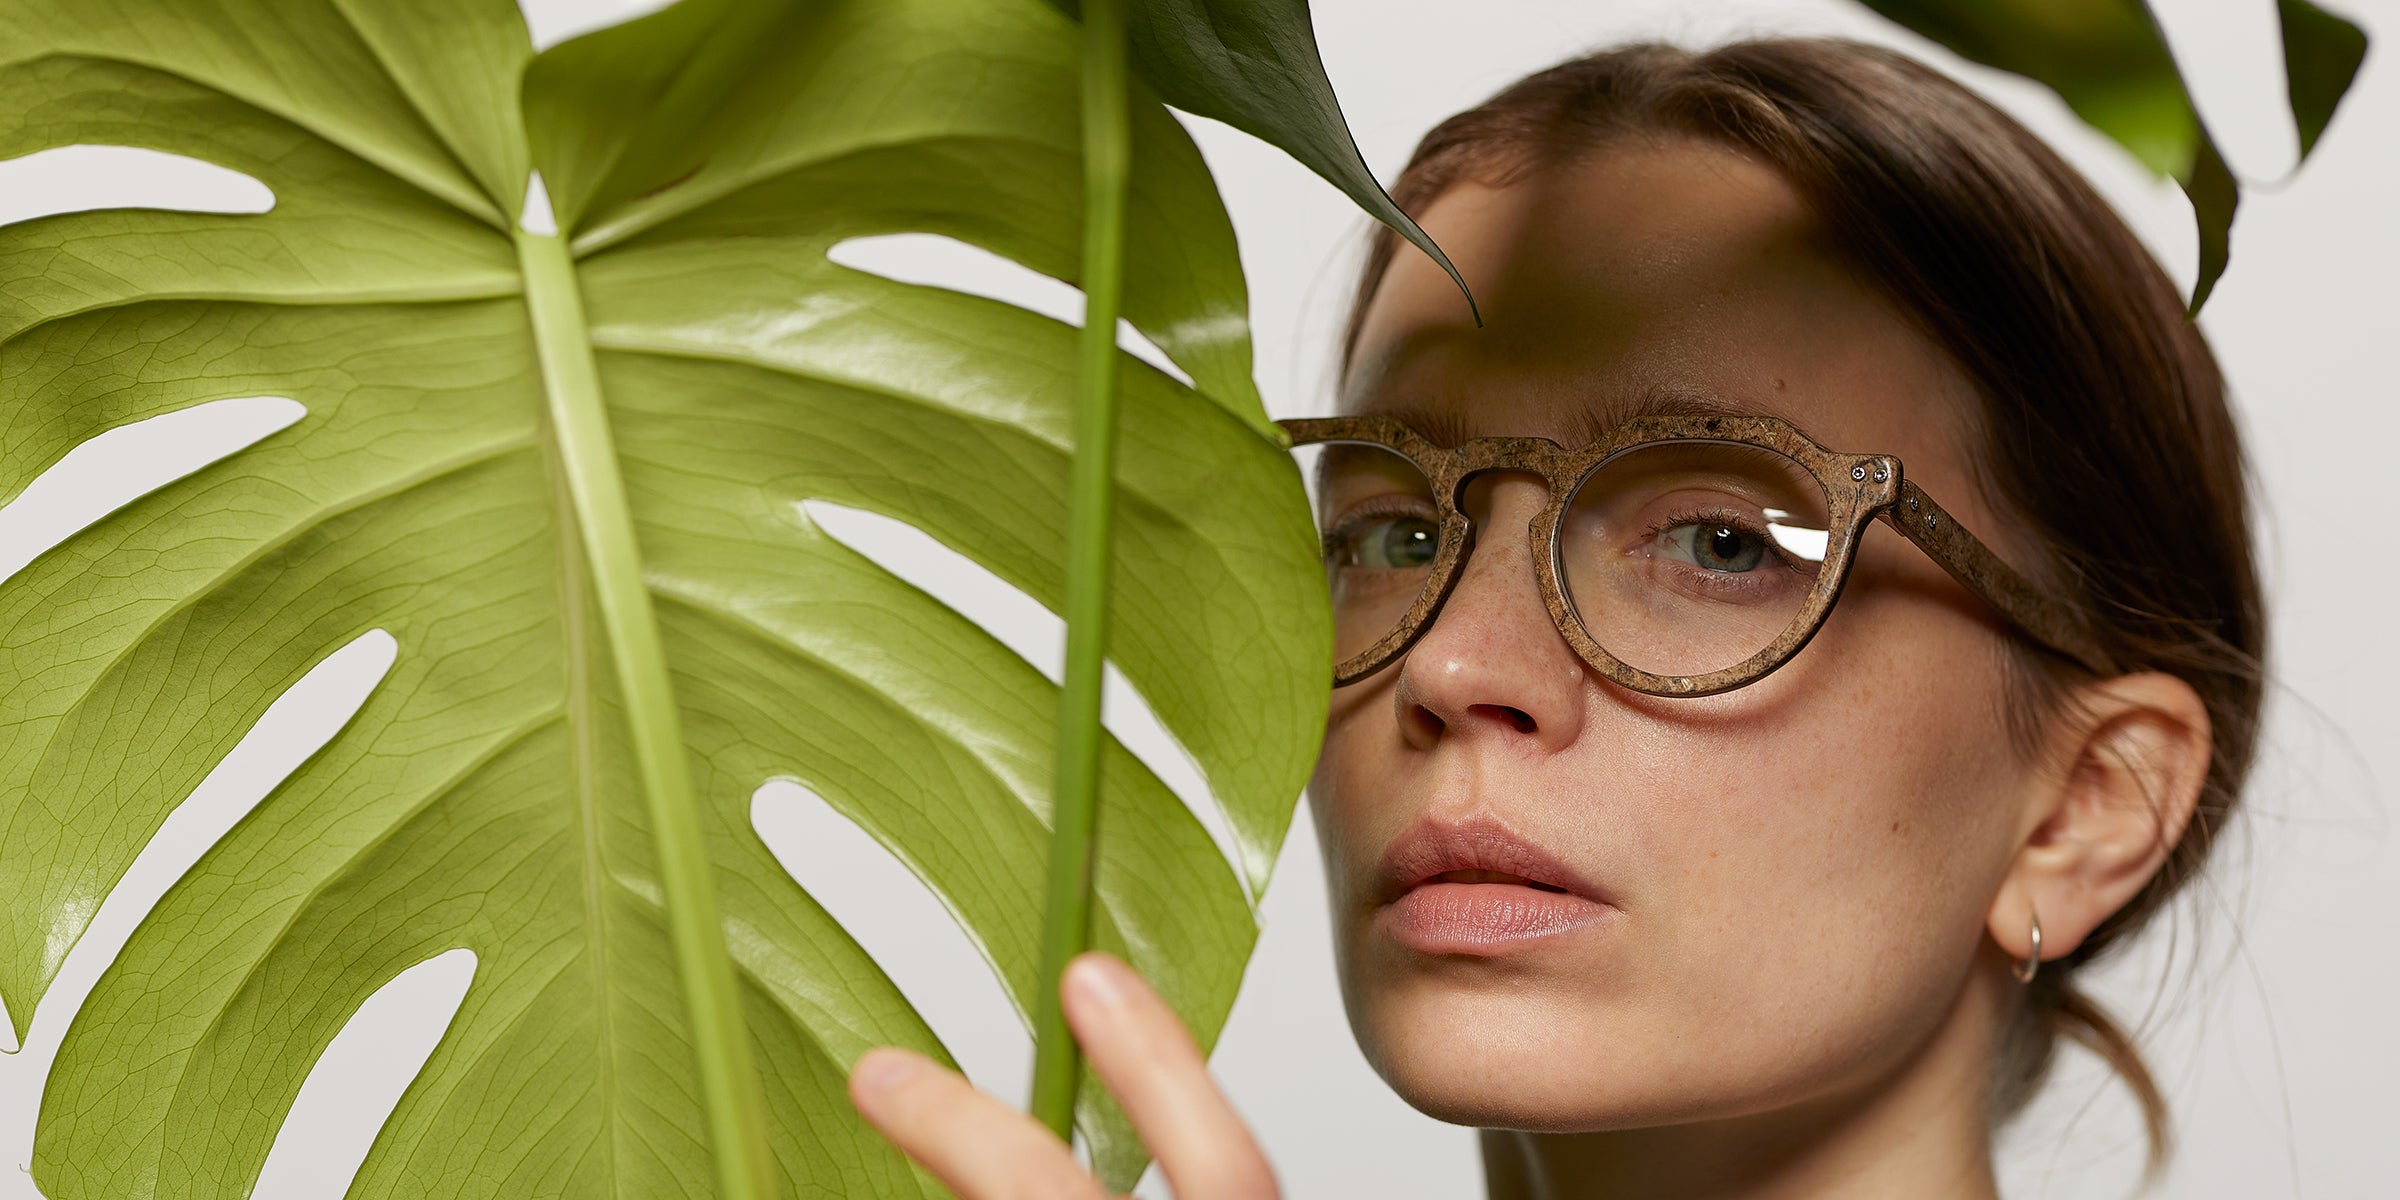 Hemp made eyewear frame worn by a woman next to a plant